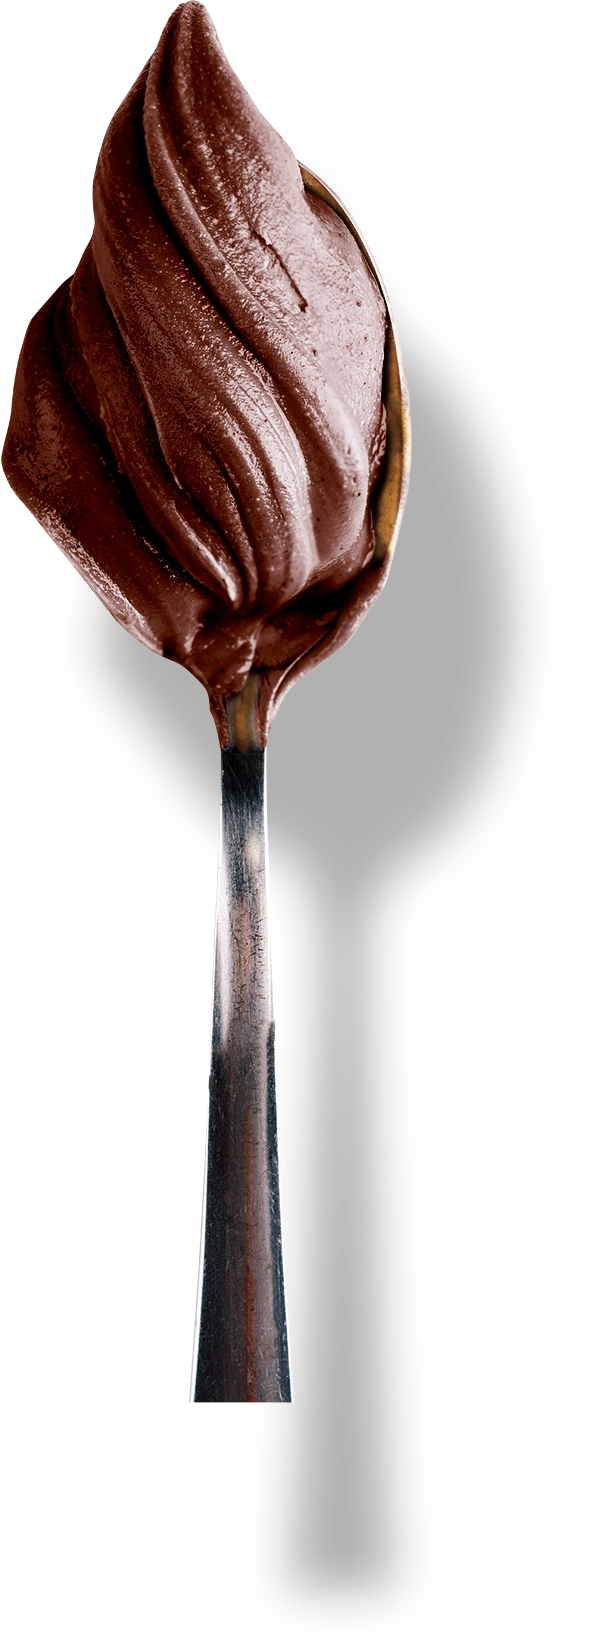 PBfit Chocolate Spread on Spoon